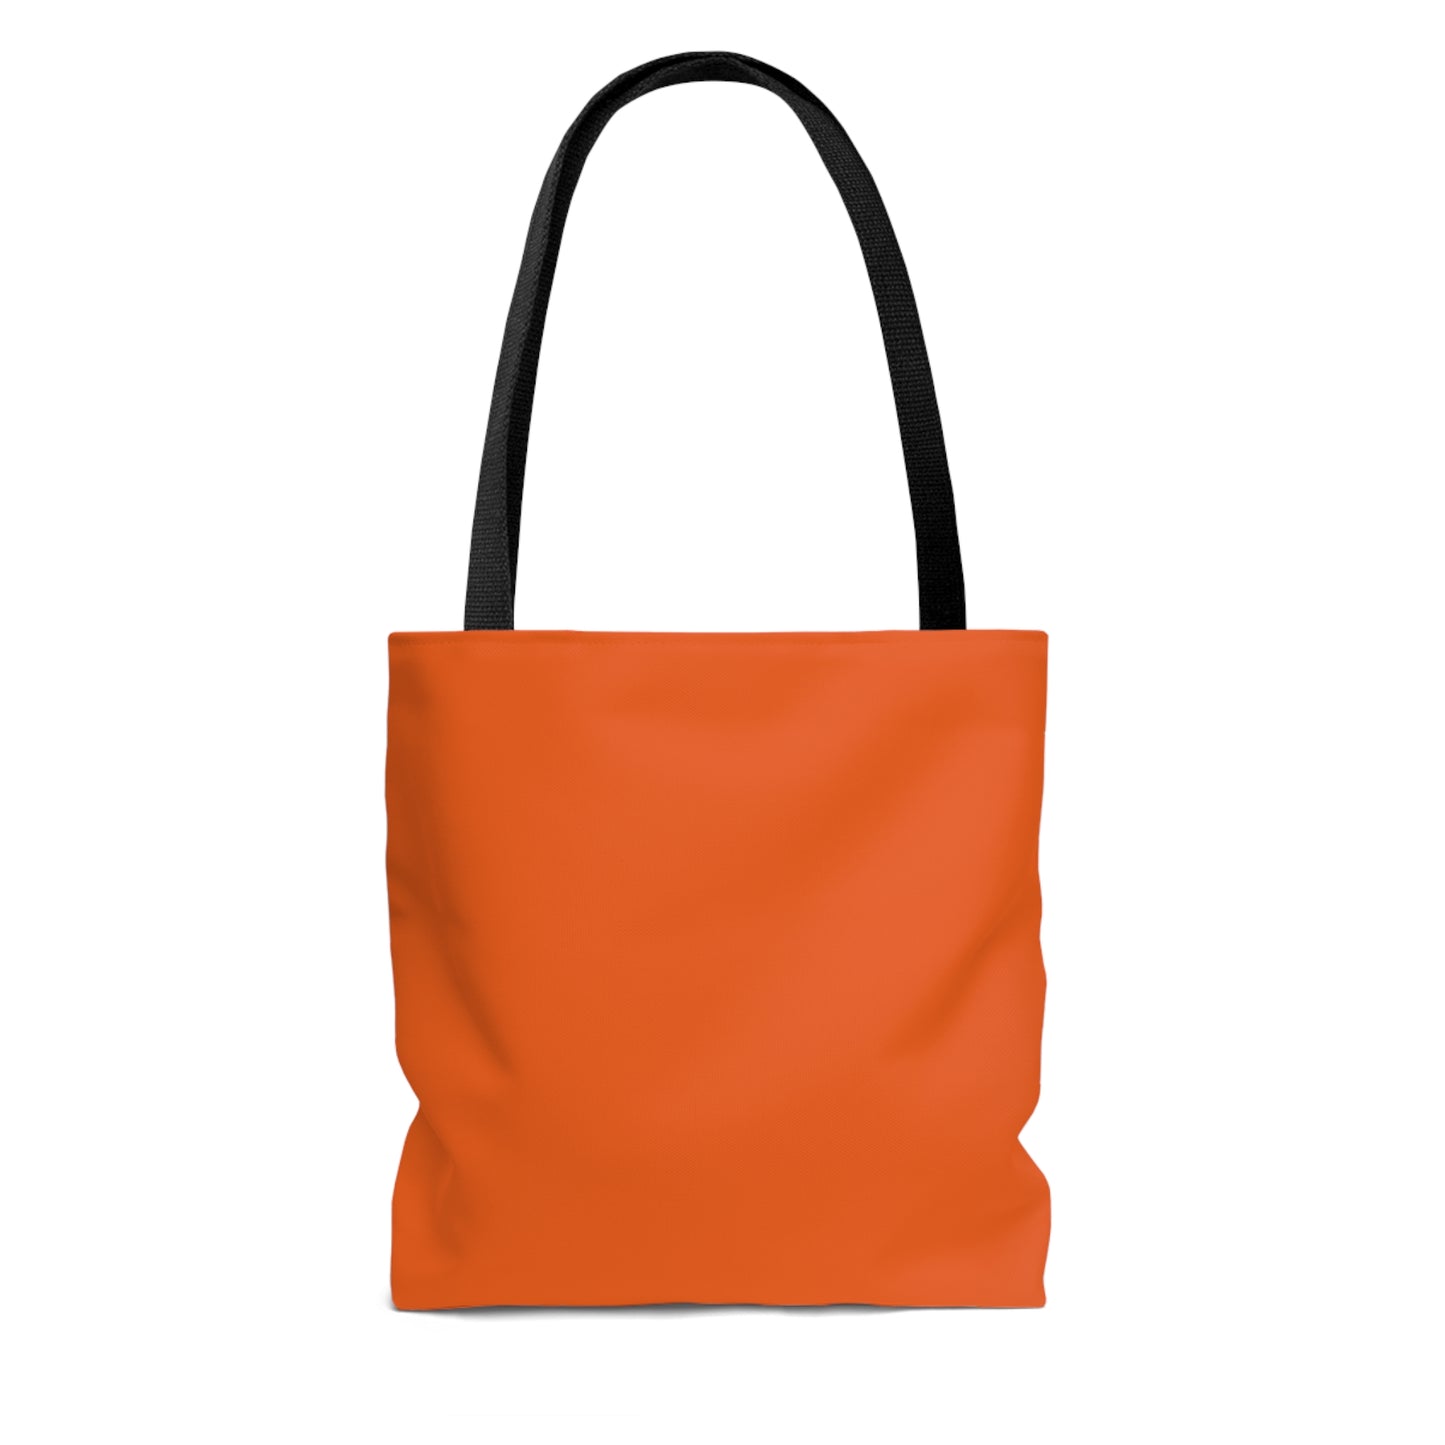 Tote Bag | Uganda Crane | Orange Tote